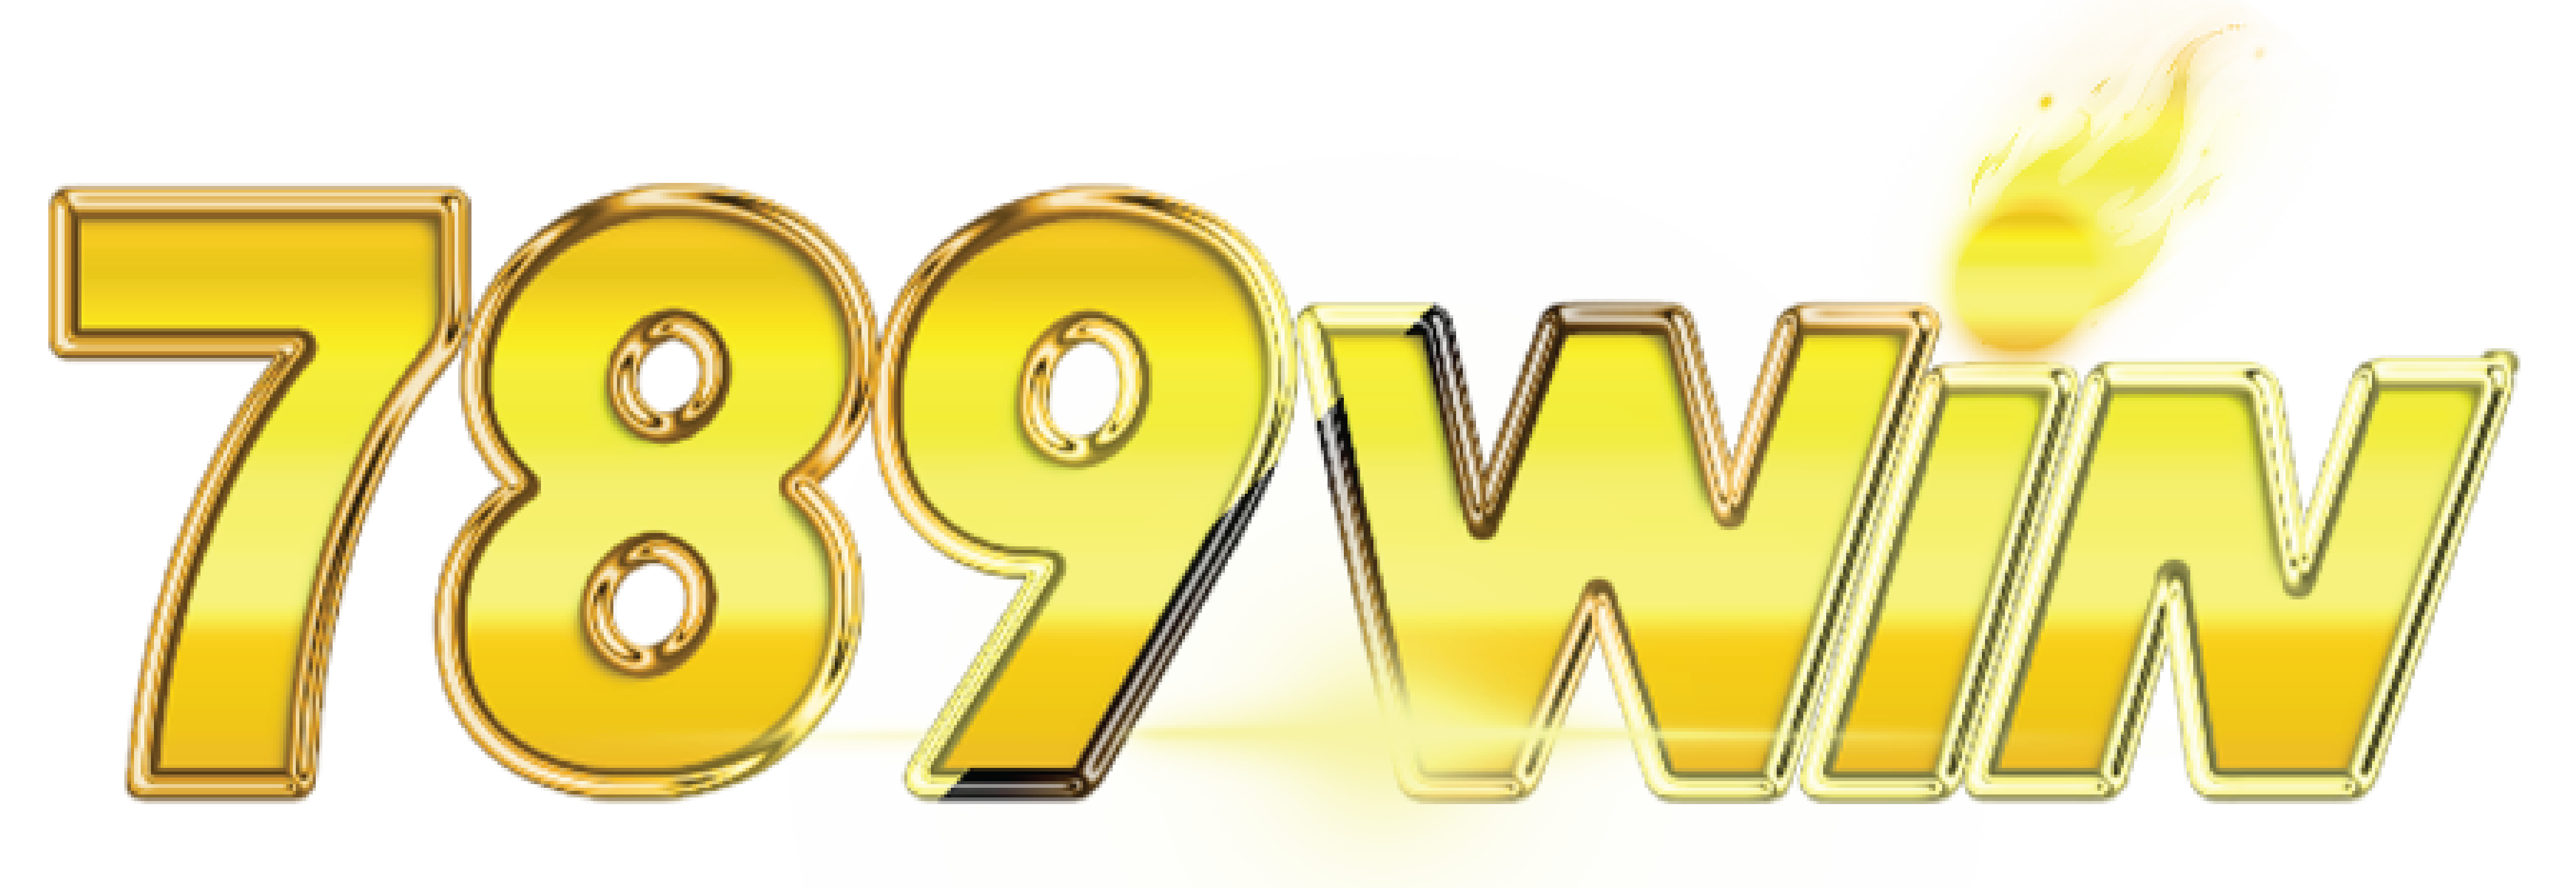 789wins1 logo